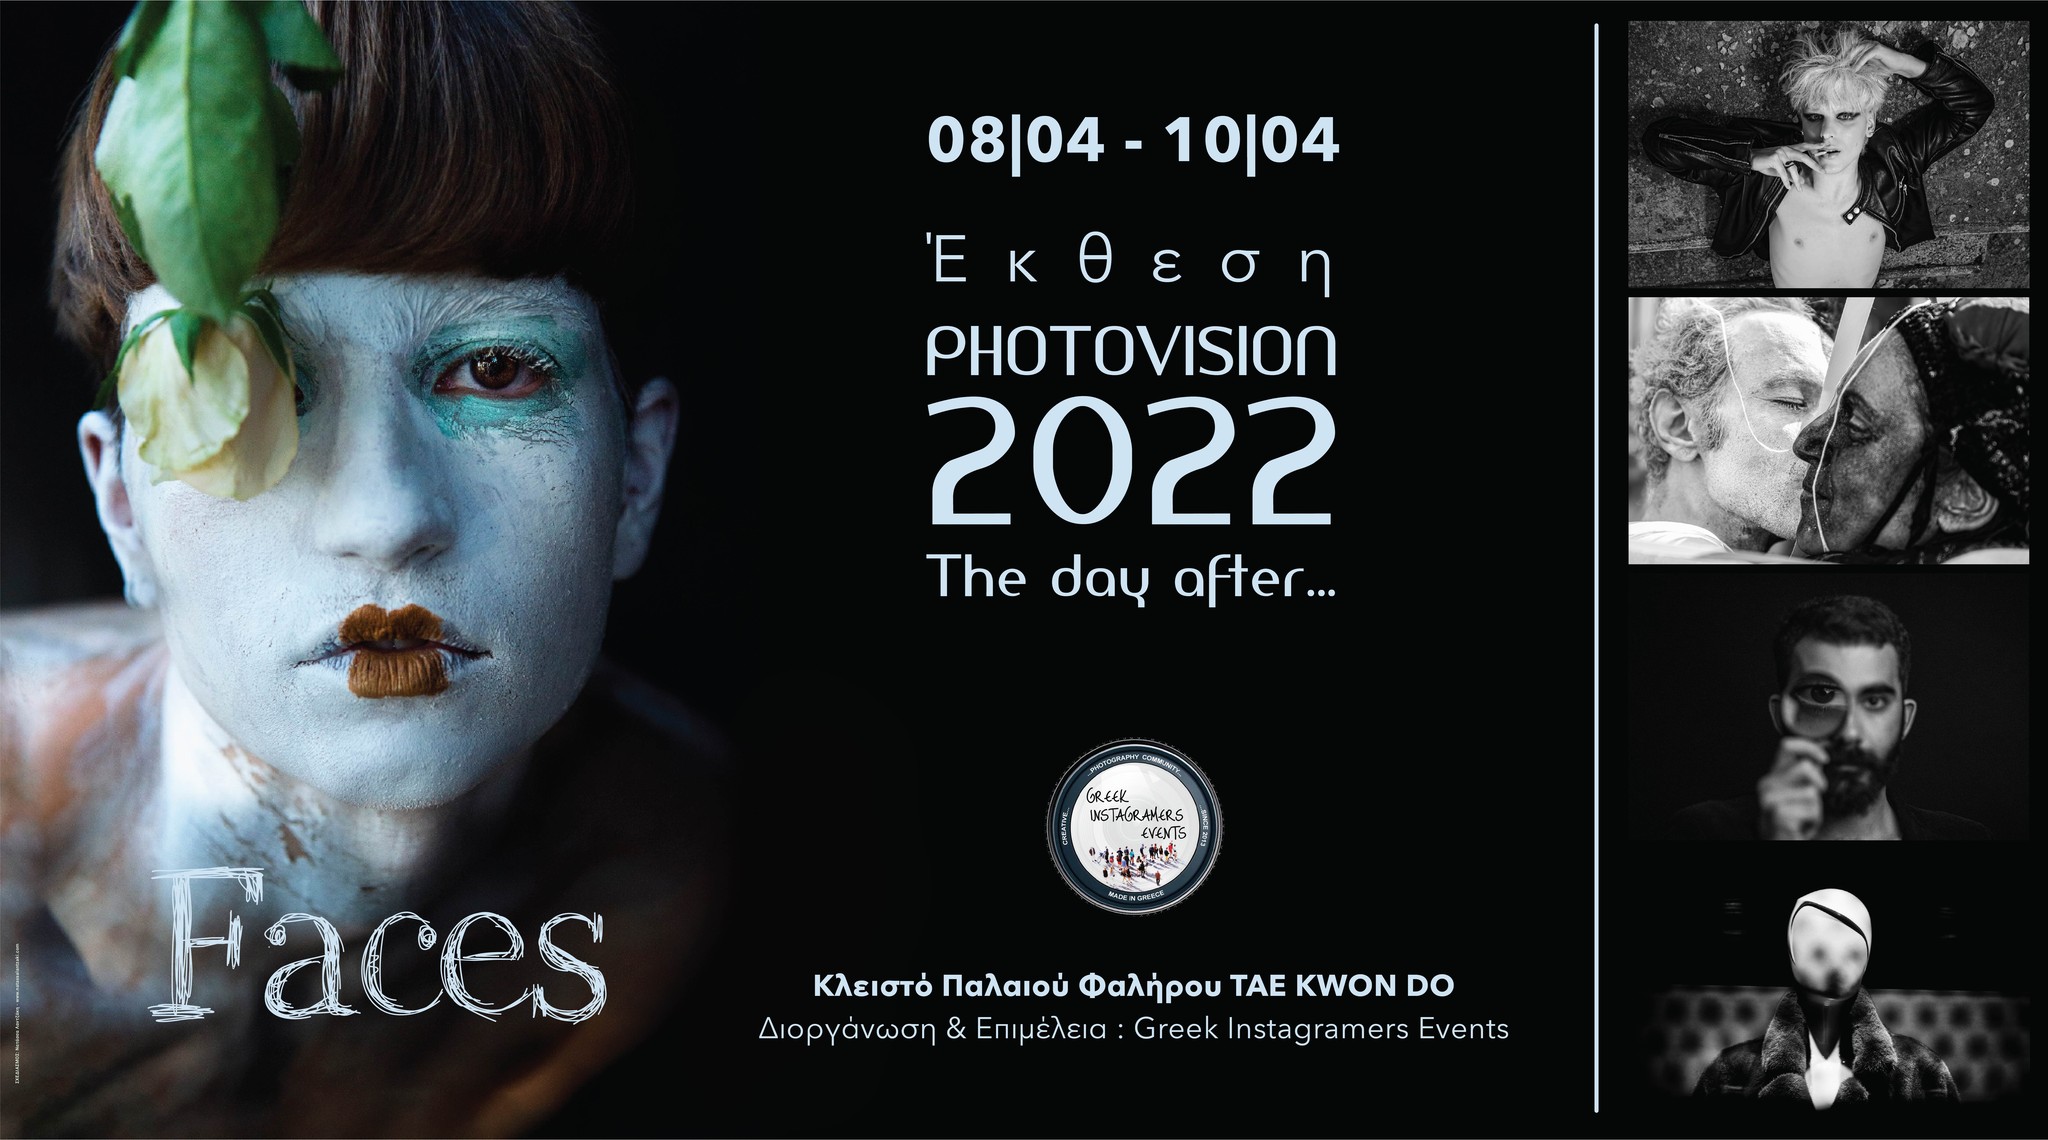 Faces: Ομαδική έκθεση καλλιτεχνικής φωτογραφίας στην Photovision 2022